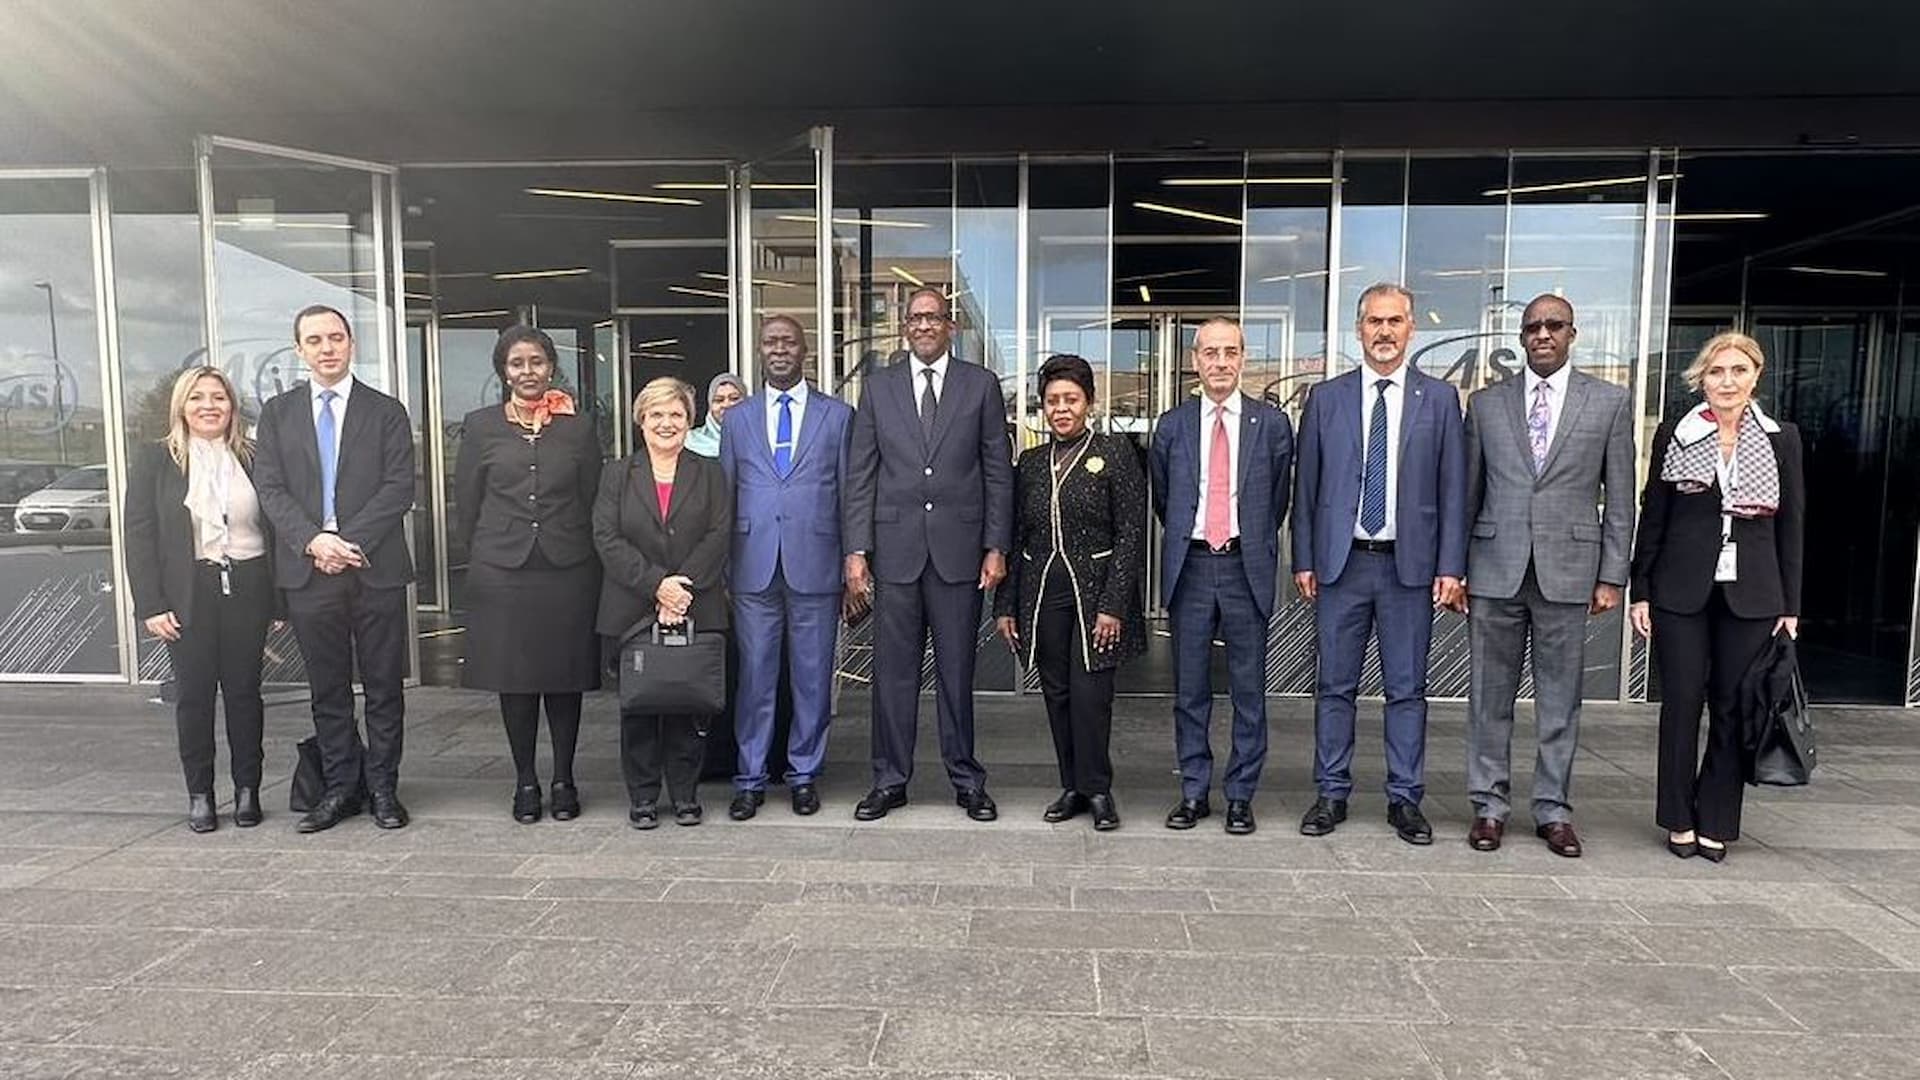 La delegazione del Kenya in visita in Italia